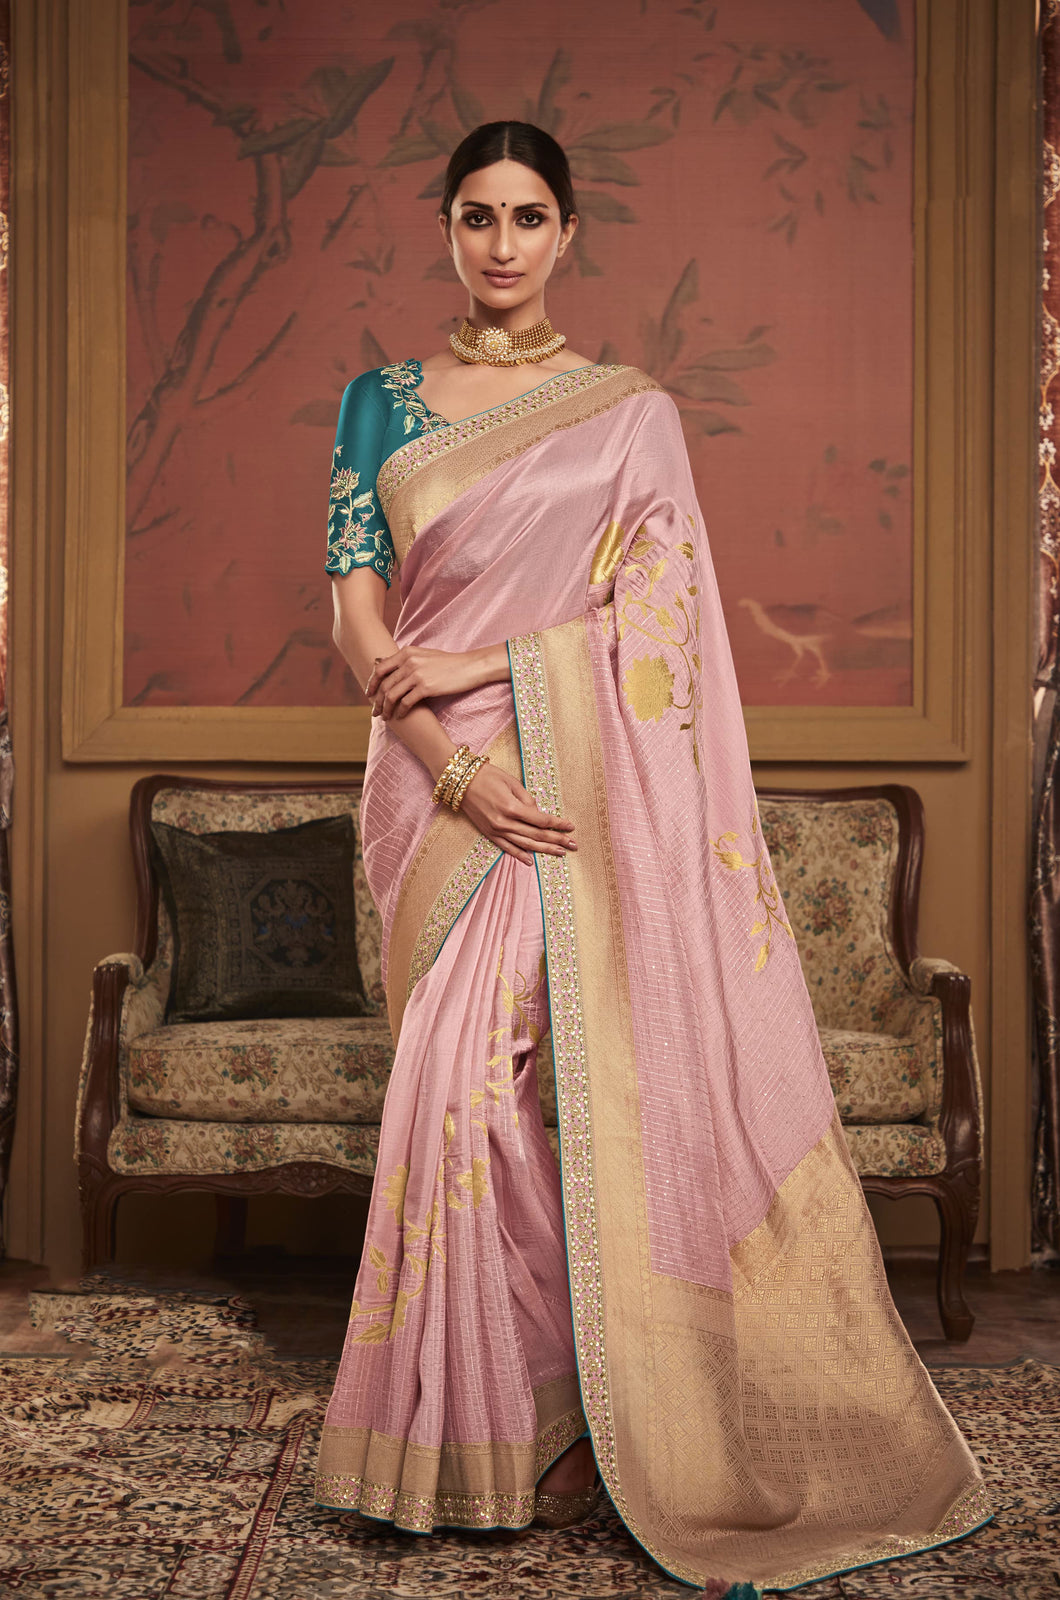 PC @Vijayeesam Baby pink kanjeevaram, close neck and full sleeves | Wedding  saree collection, Indian bridal outfits, India wedding dress